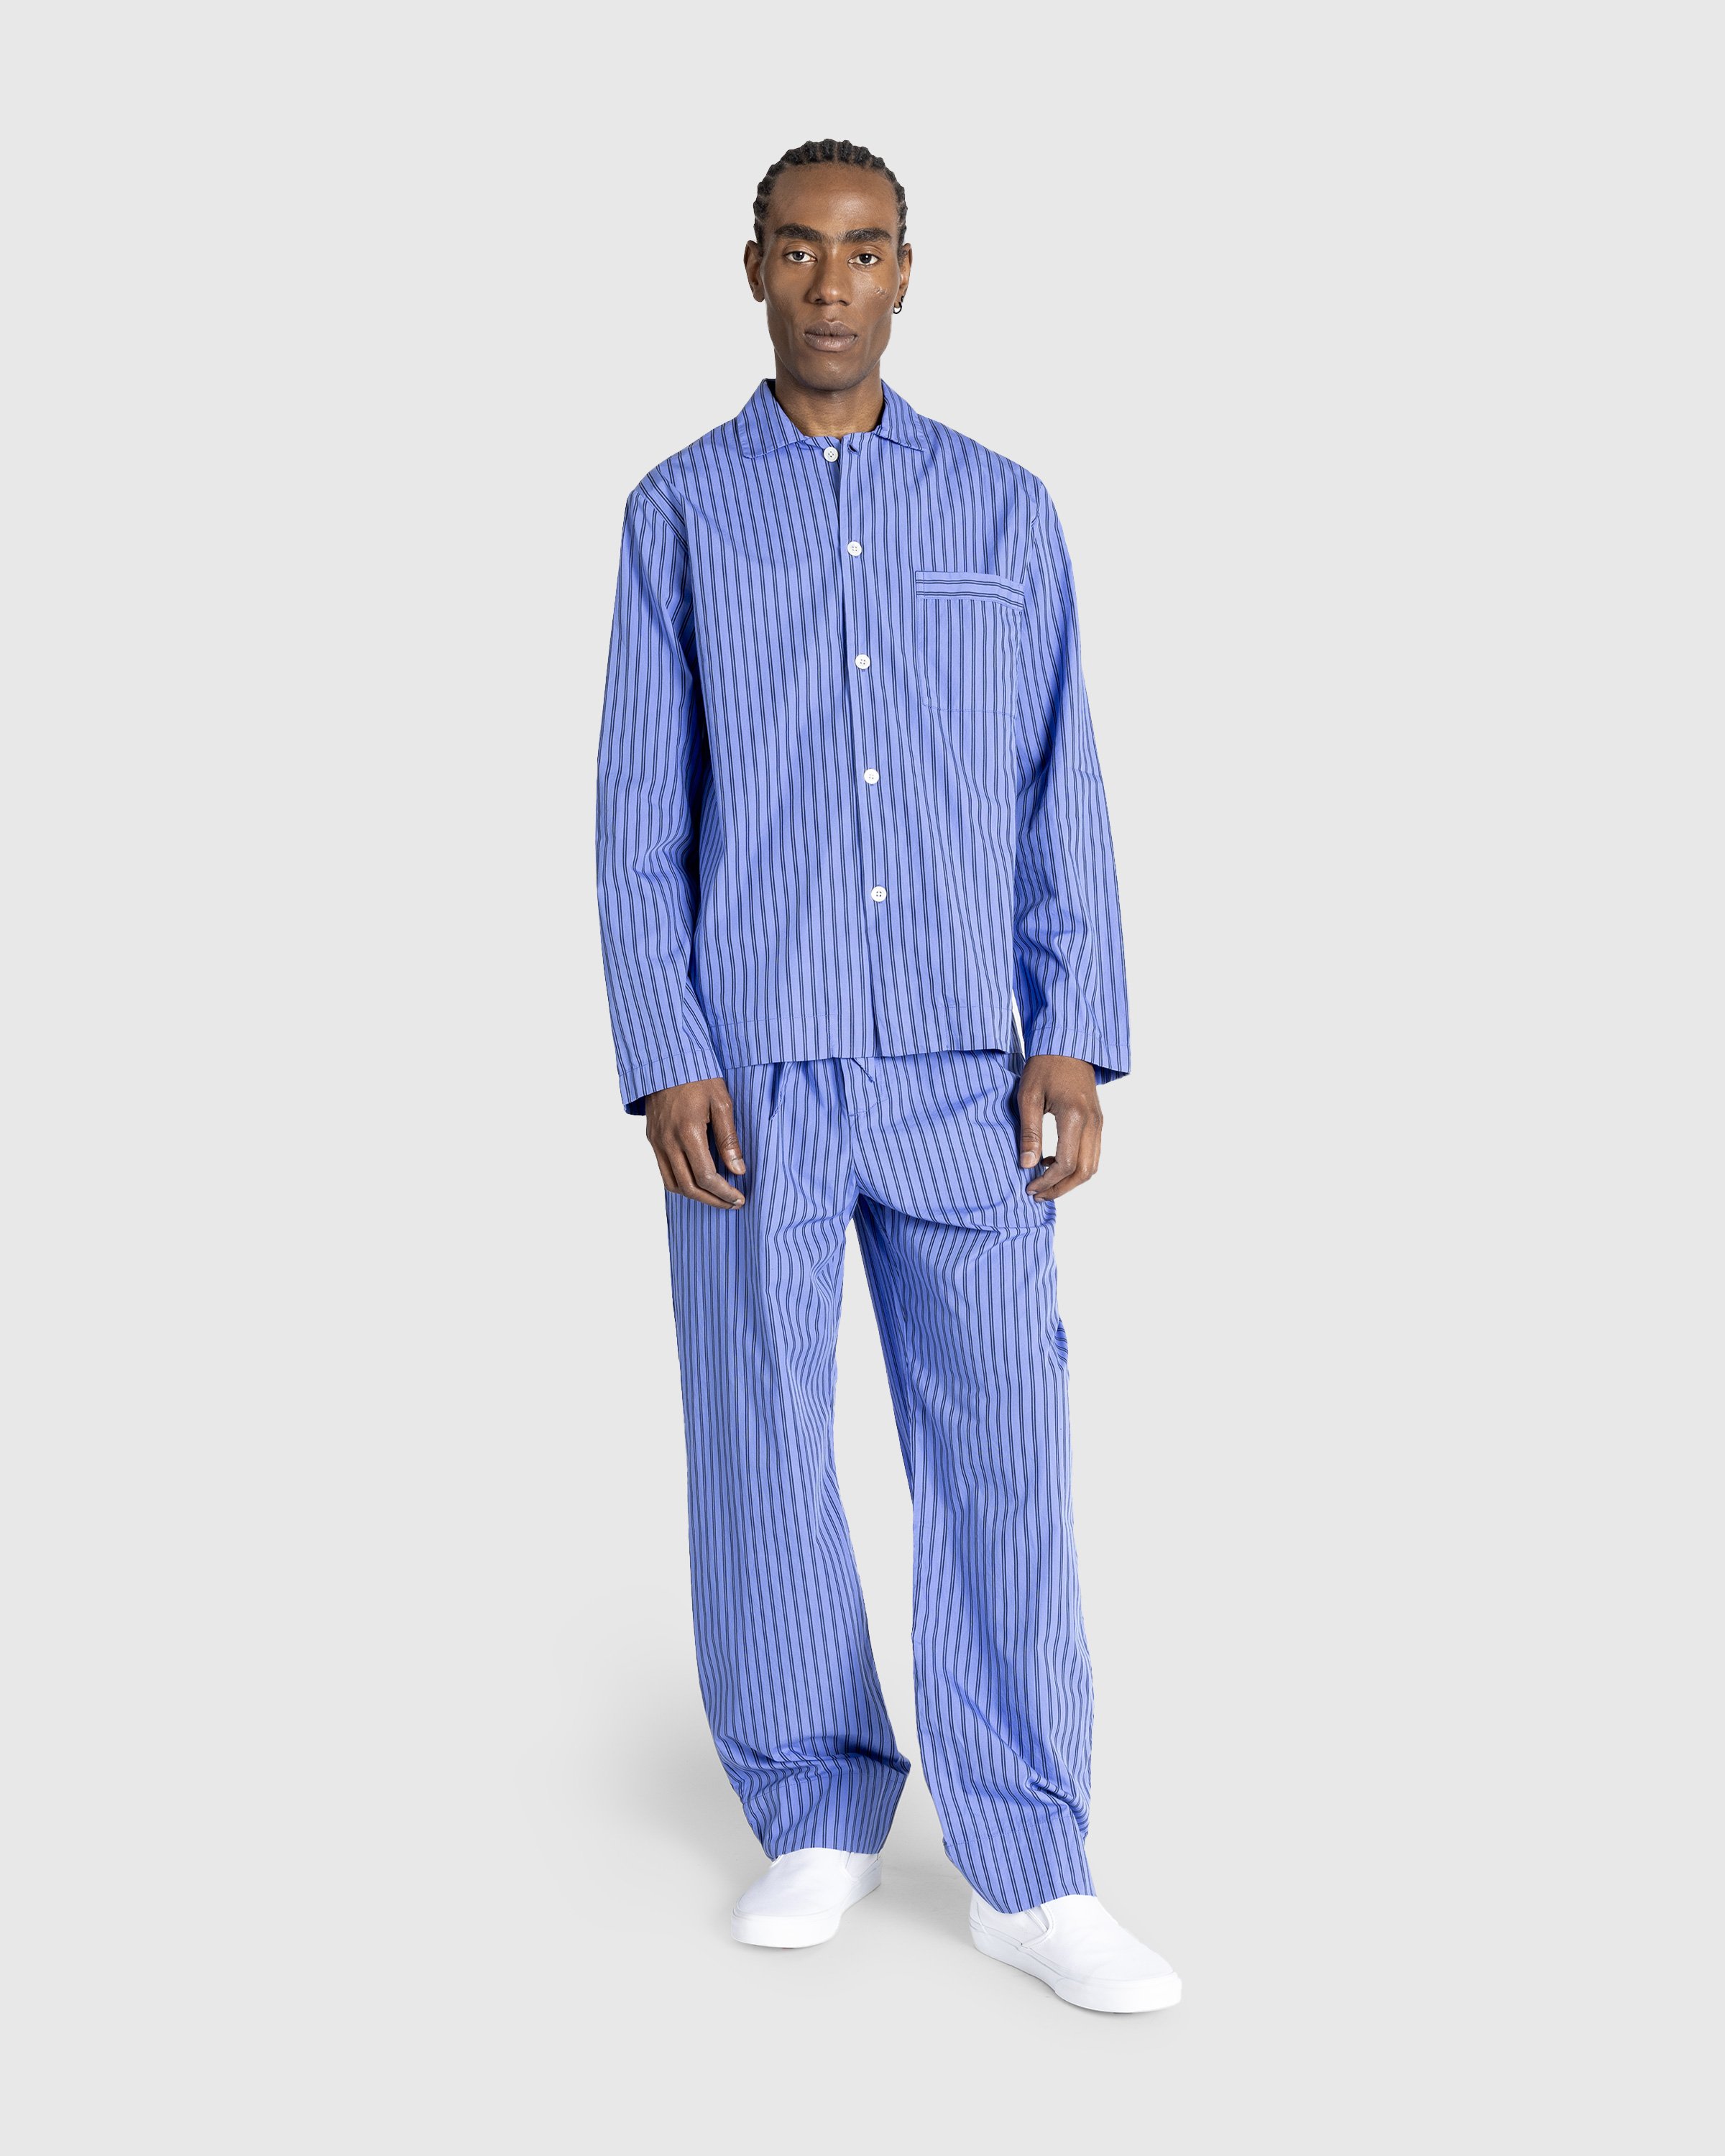 Tekla - Cotton Poplin - Pyjamas Shirt Boro Stripes - Clothing - Blue - Image 3